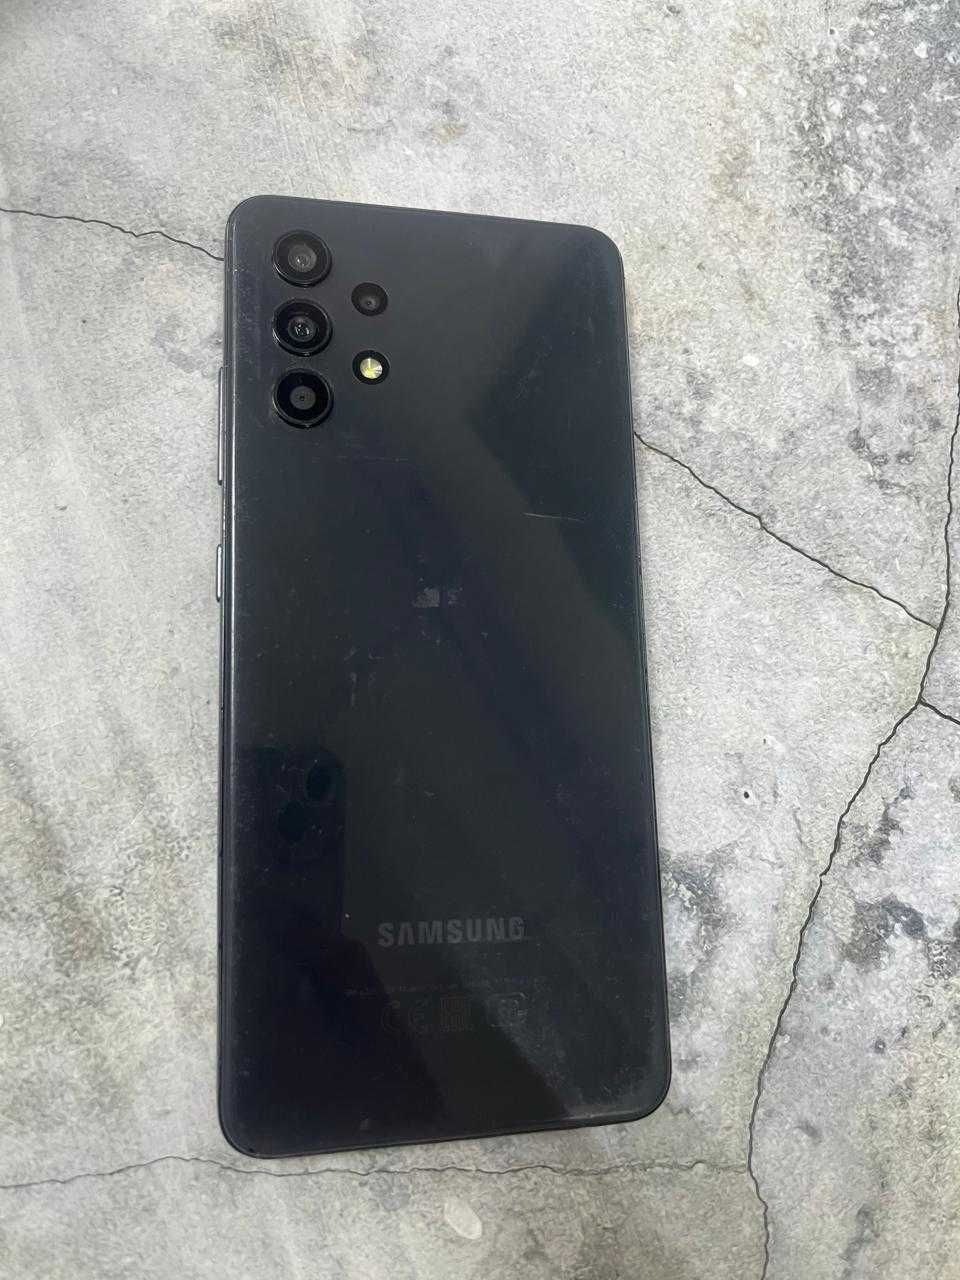 Samsung Galaxy A32, 128 Gb г.Семей, Глинки 51,2 ЛОТ 359133